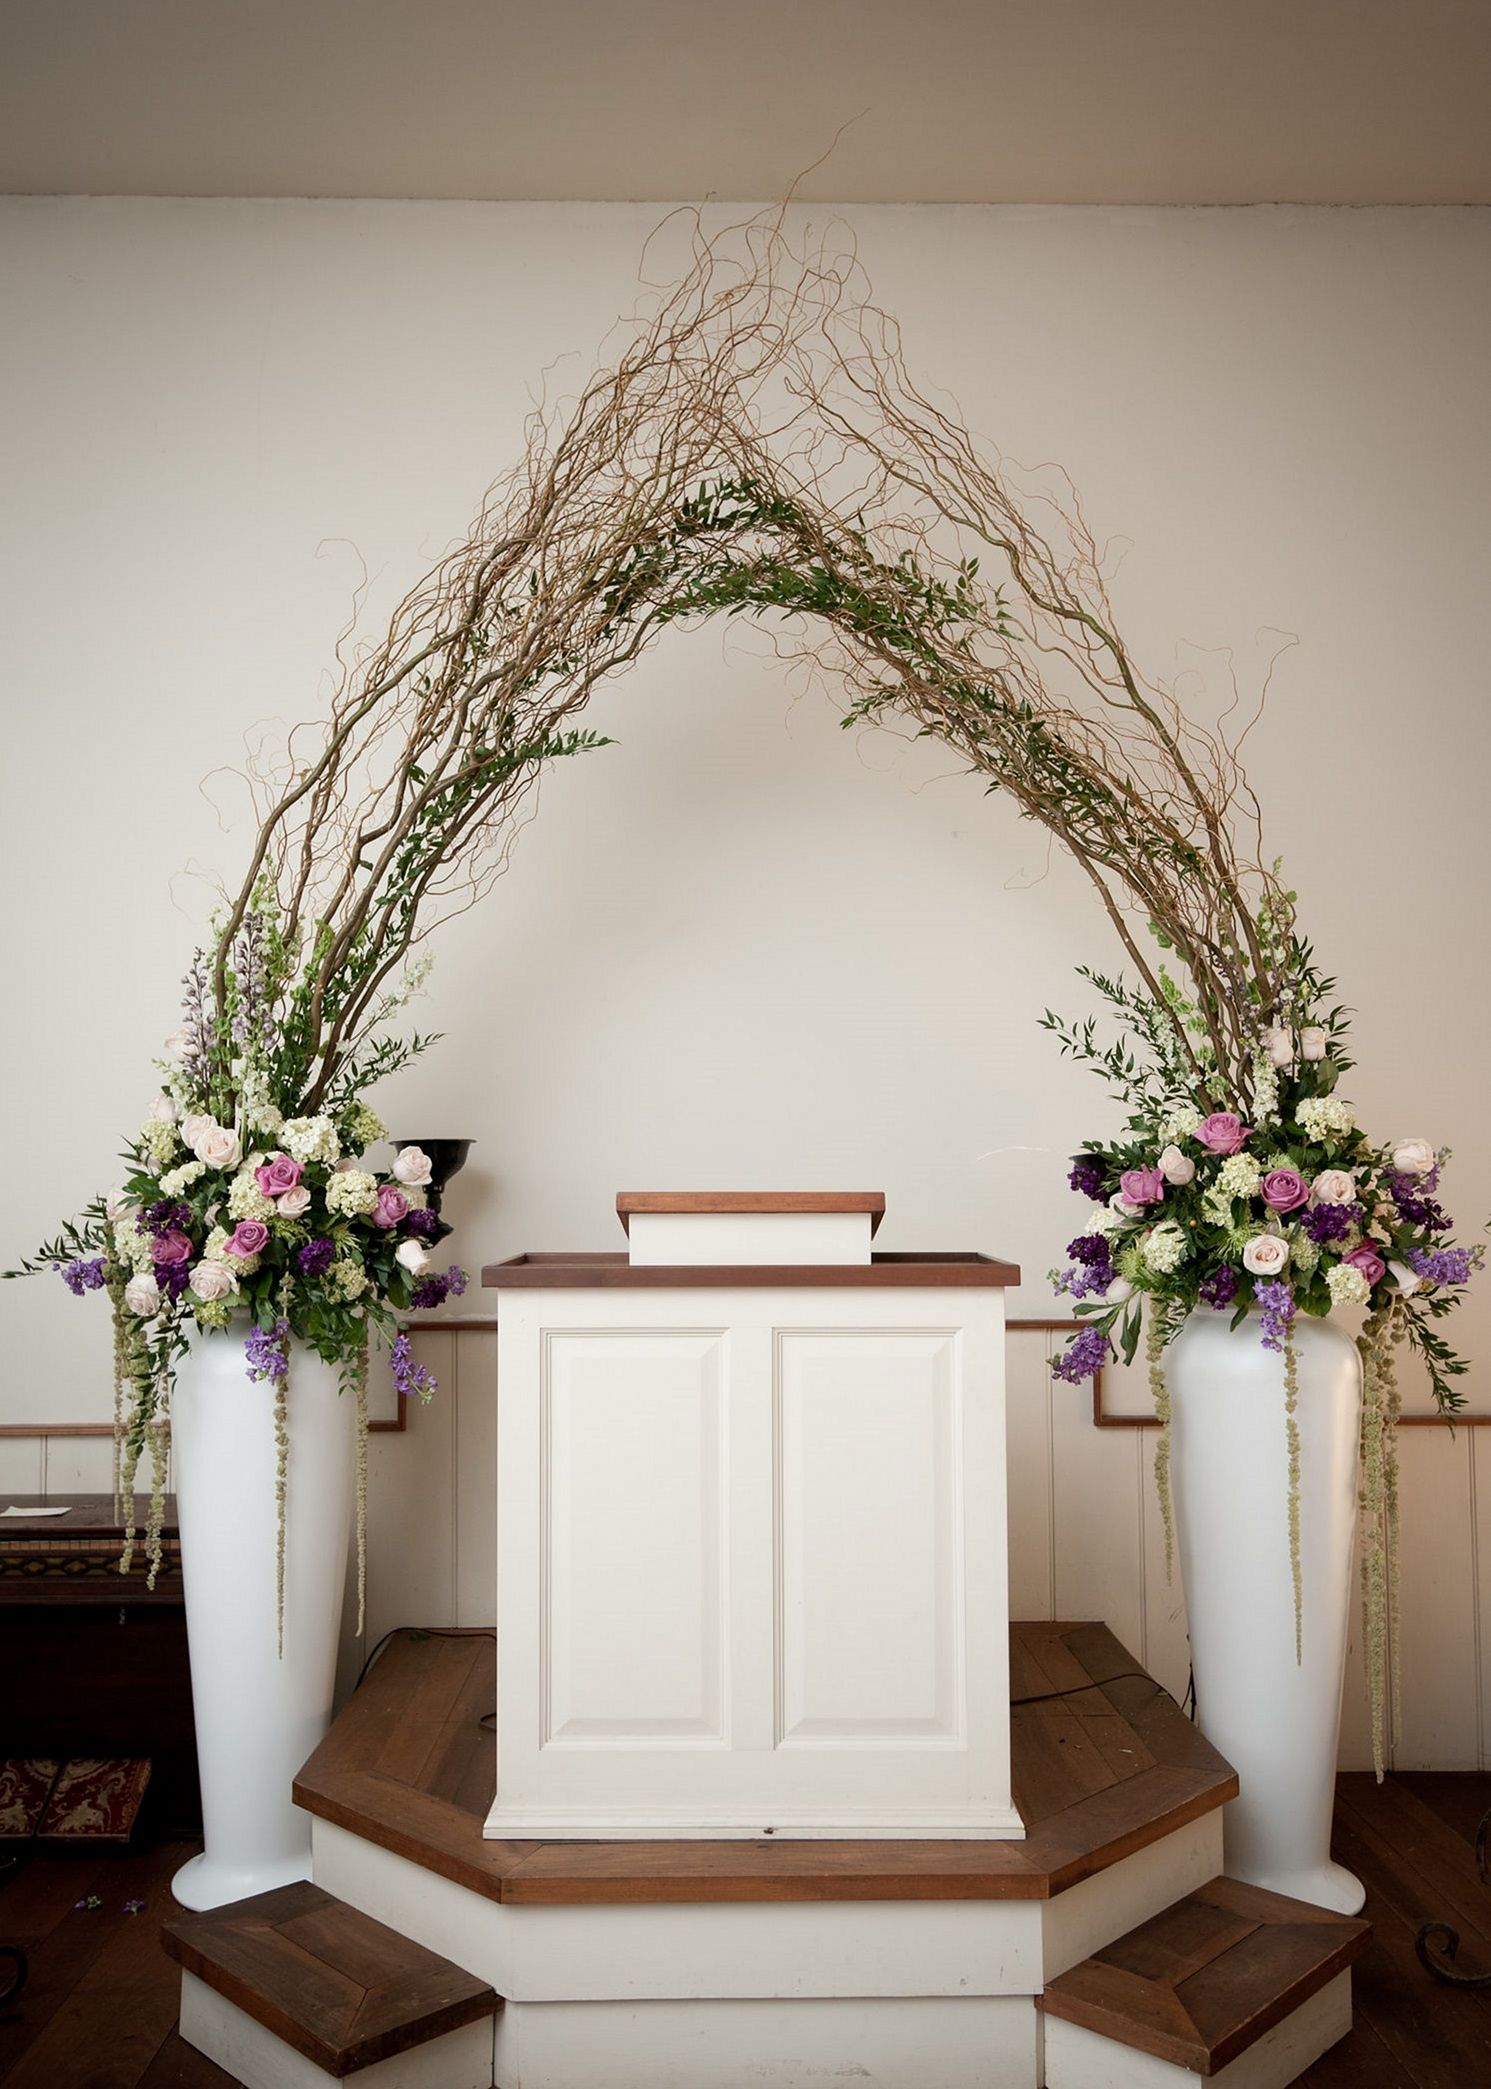 Beautiful winter wedding themes ideas from rosehillweddingflowers